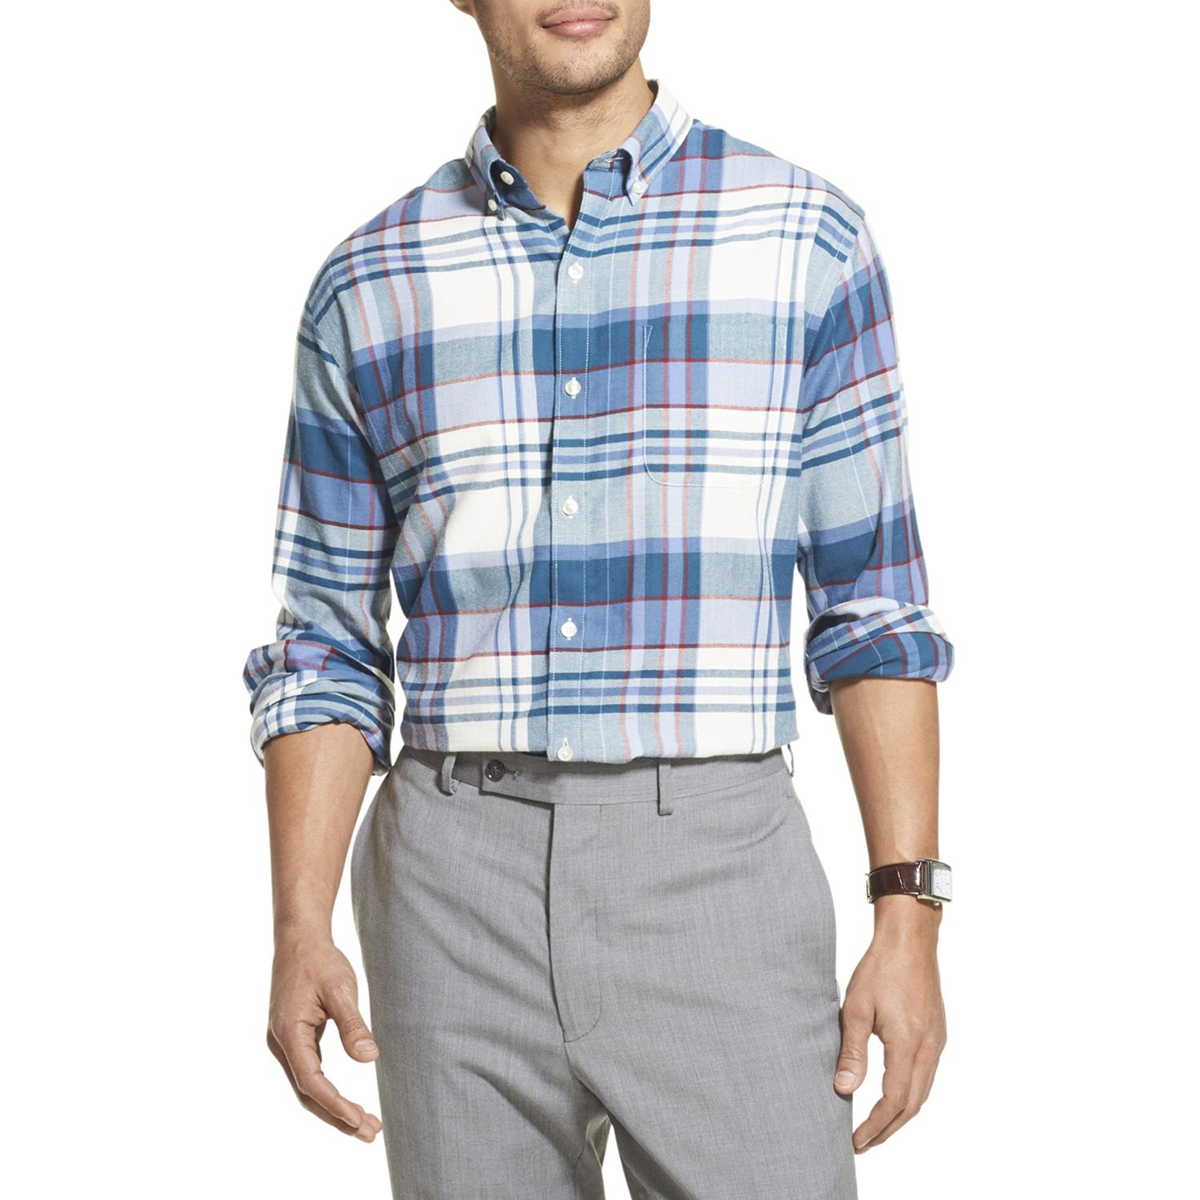 Van Heusen Men's Long-Sleeve Flex Plaid Button Down Shirt - Blue, M